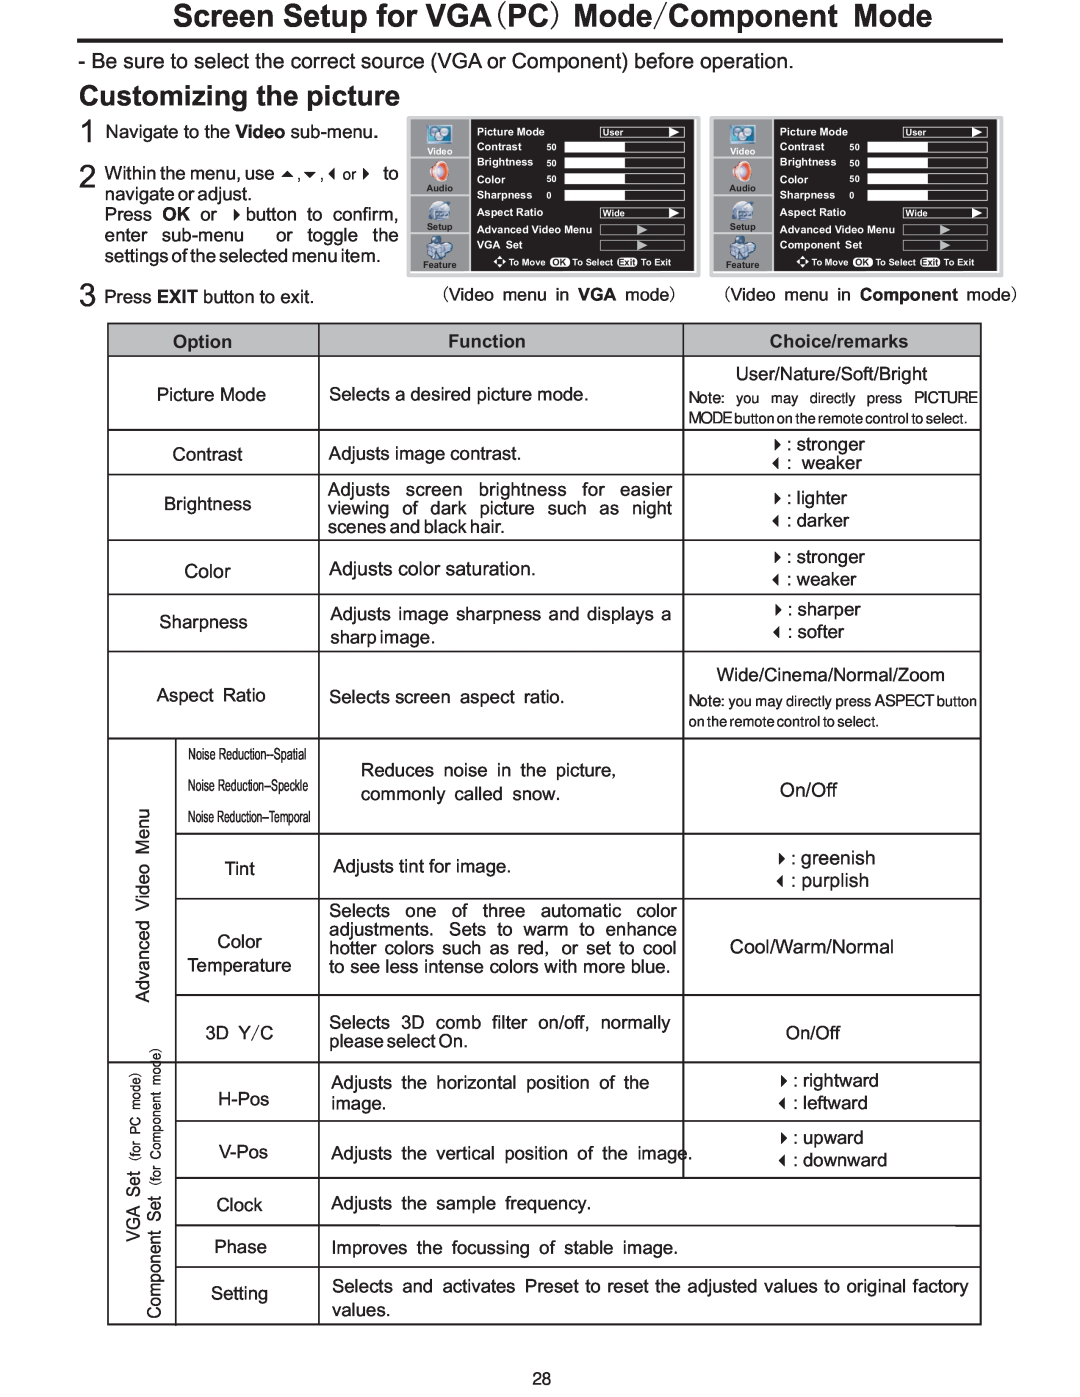 Polaroid PLA-4248 manual Screen Setup for VGAPC Mode/Component Mode, Customizing the picture 